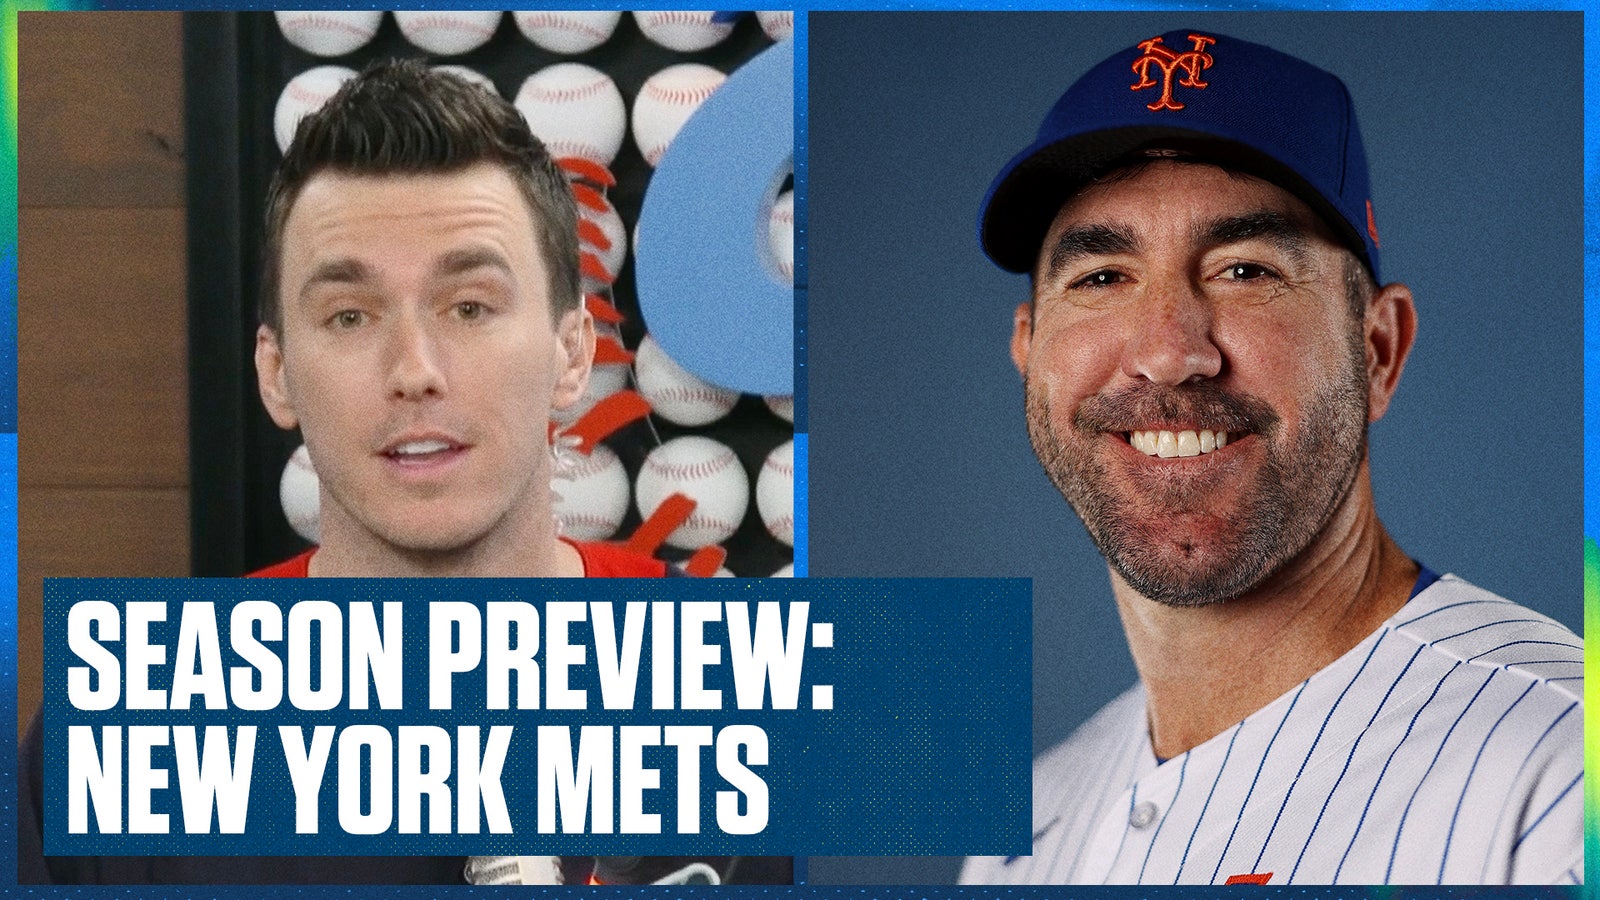 New York Mets season preview